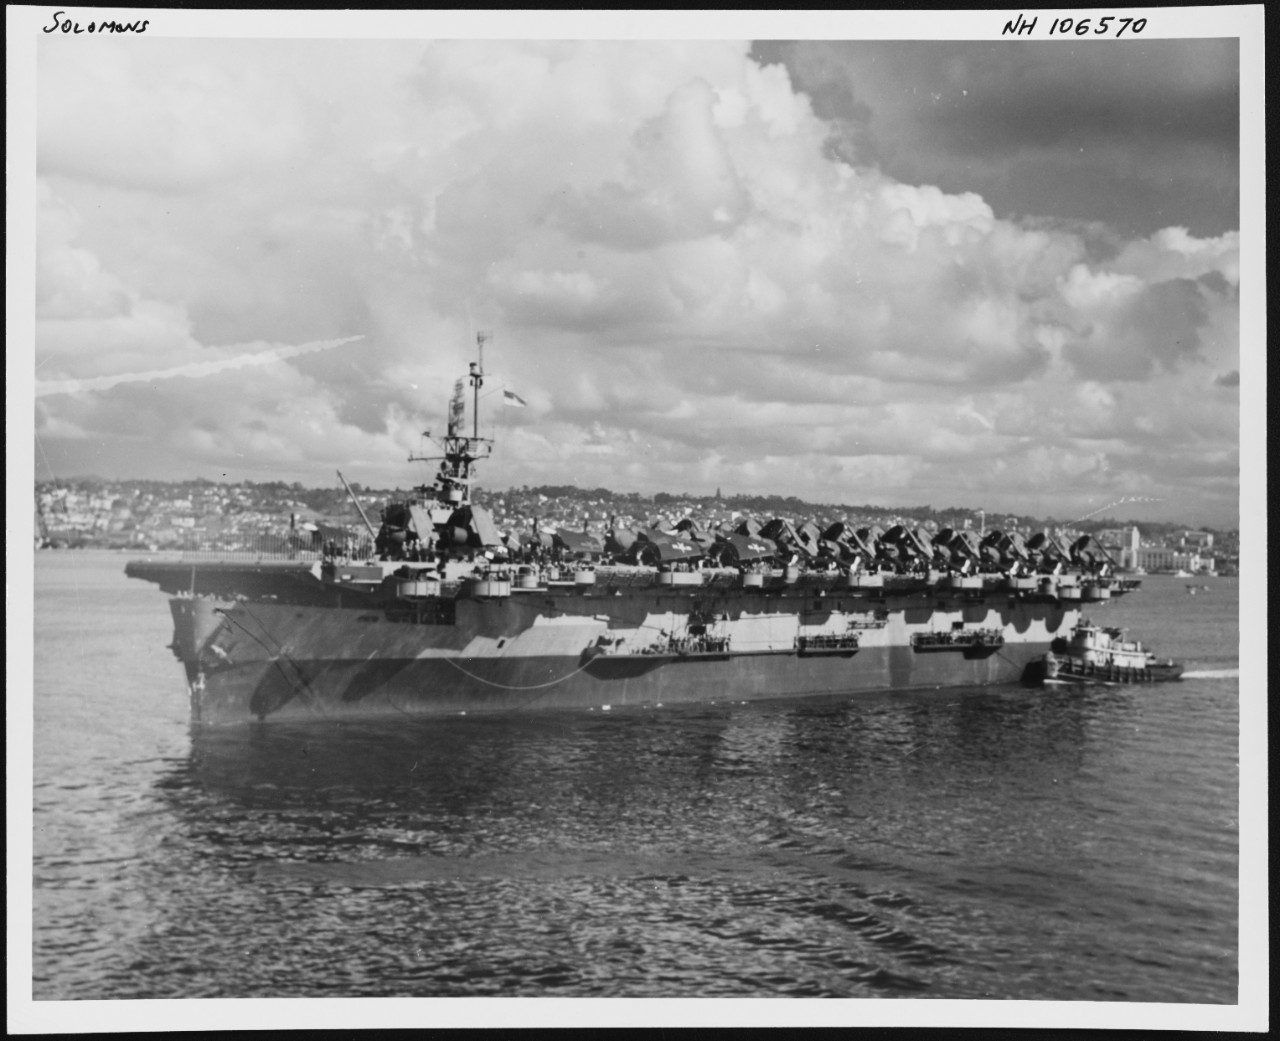 Photo # NH 106570  USS Solomons